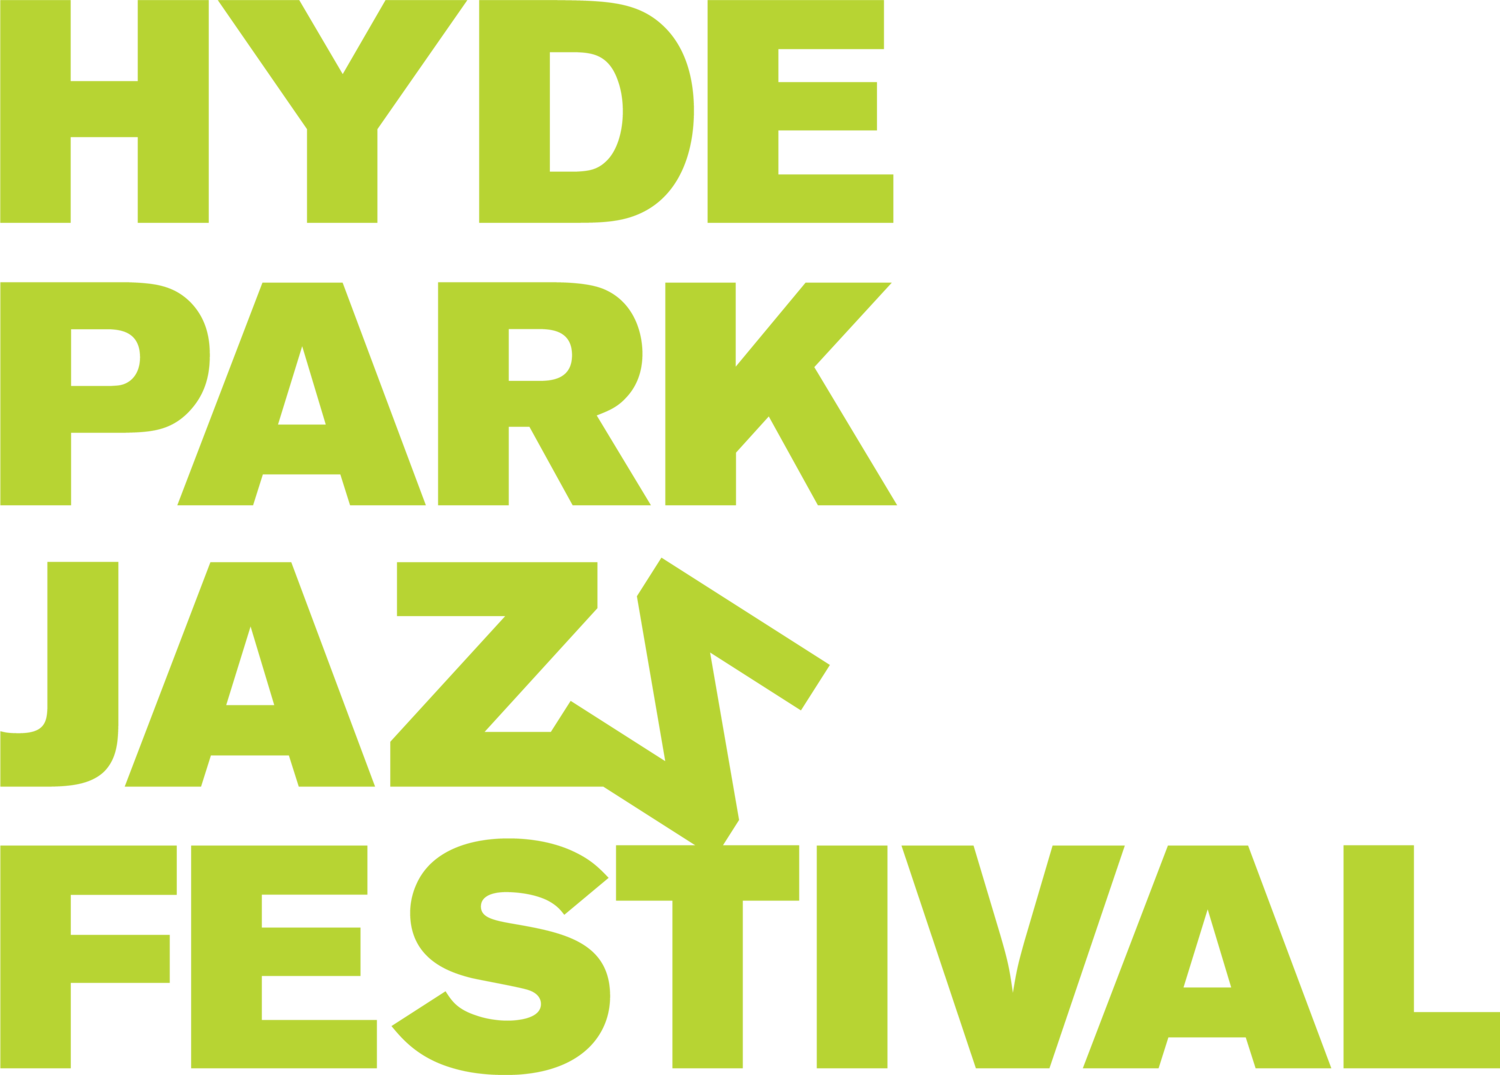 Hyde Park Jazz Fest